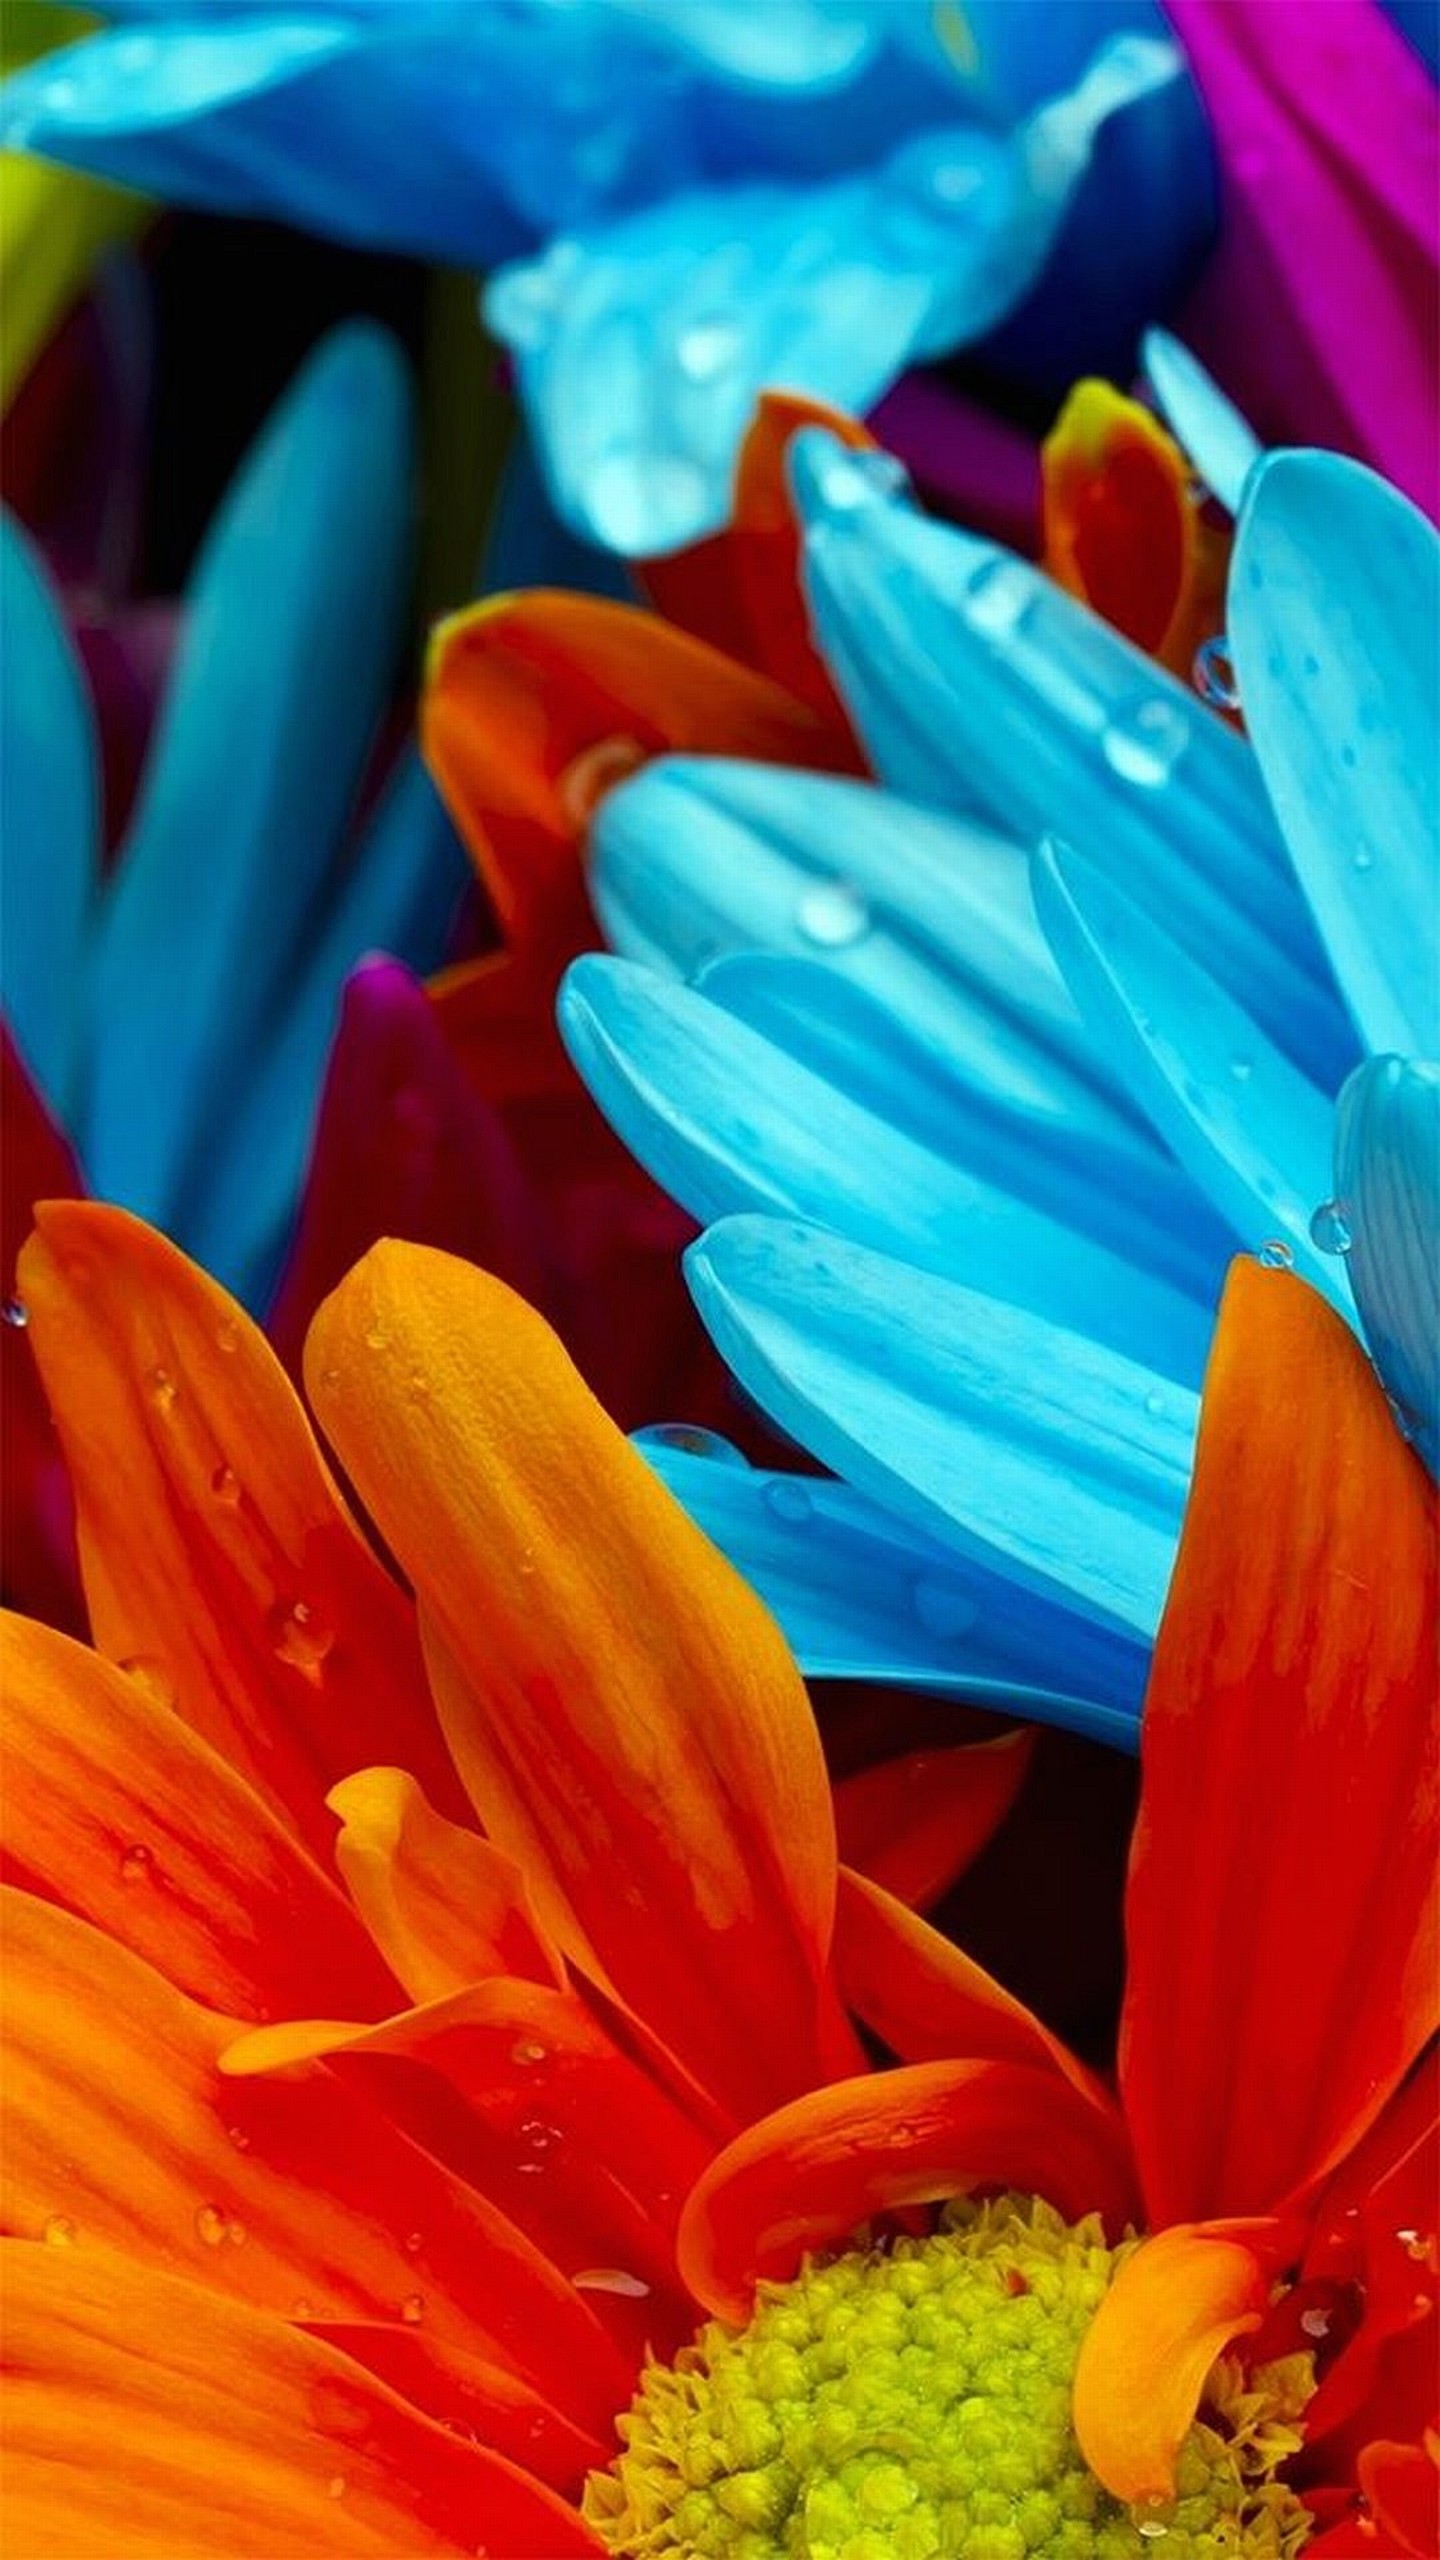 lg g4 wallpaper,petal,blue,orange,flower,close up